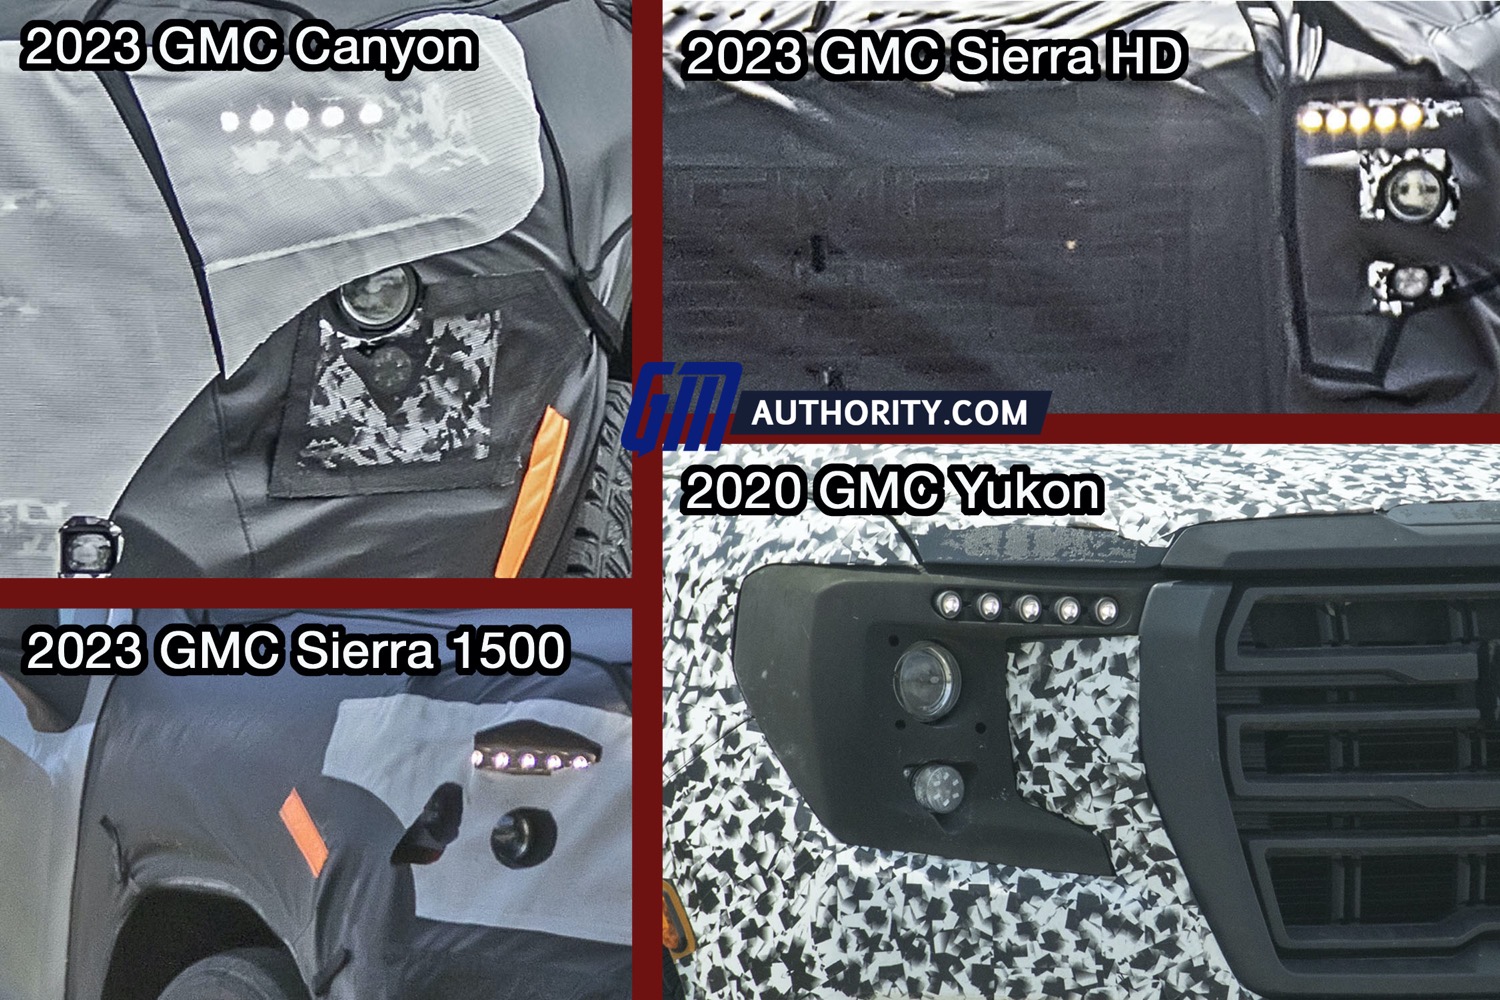 gmc-placeholder-prototype-headlights-2021-gmc-yukon-2023-gmc-canyon-2022-gmc-sierra-1500-2023-gmc-sierra-hd